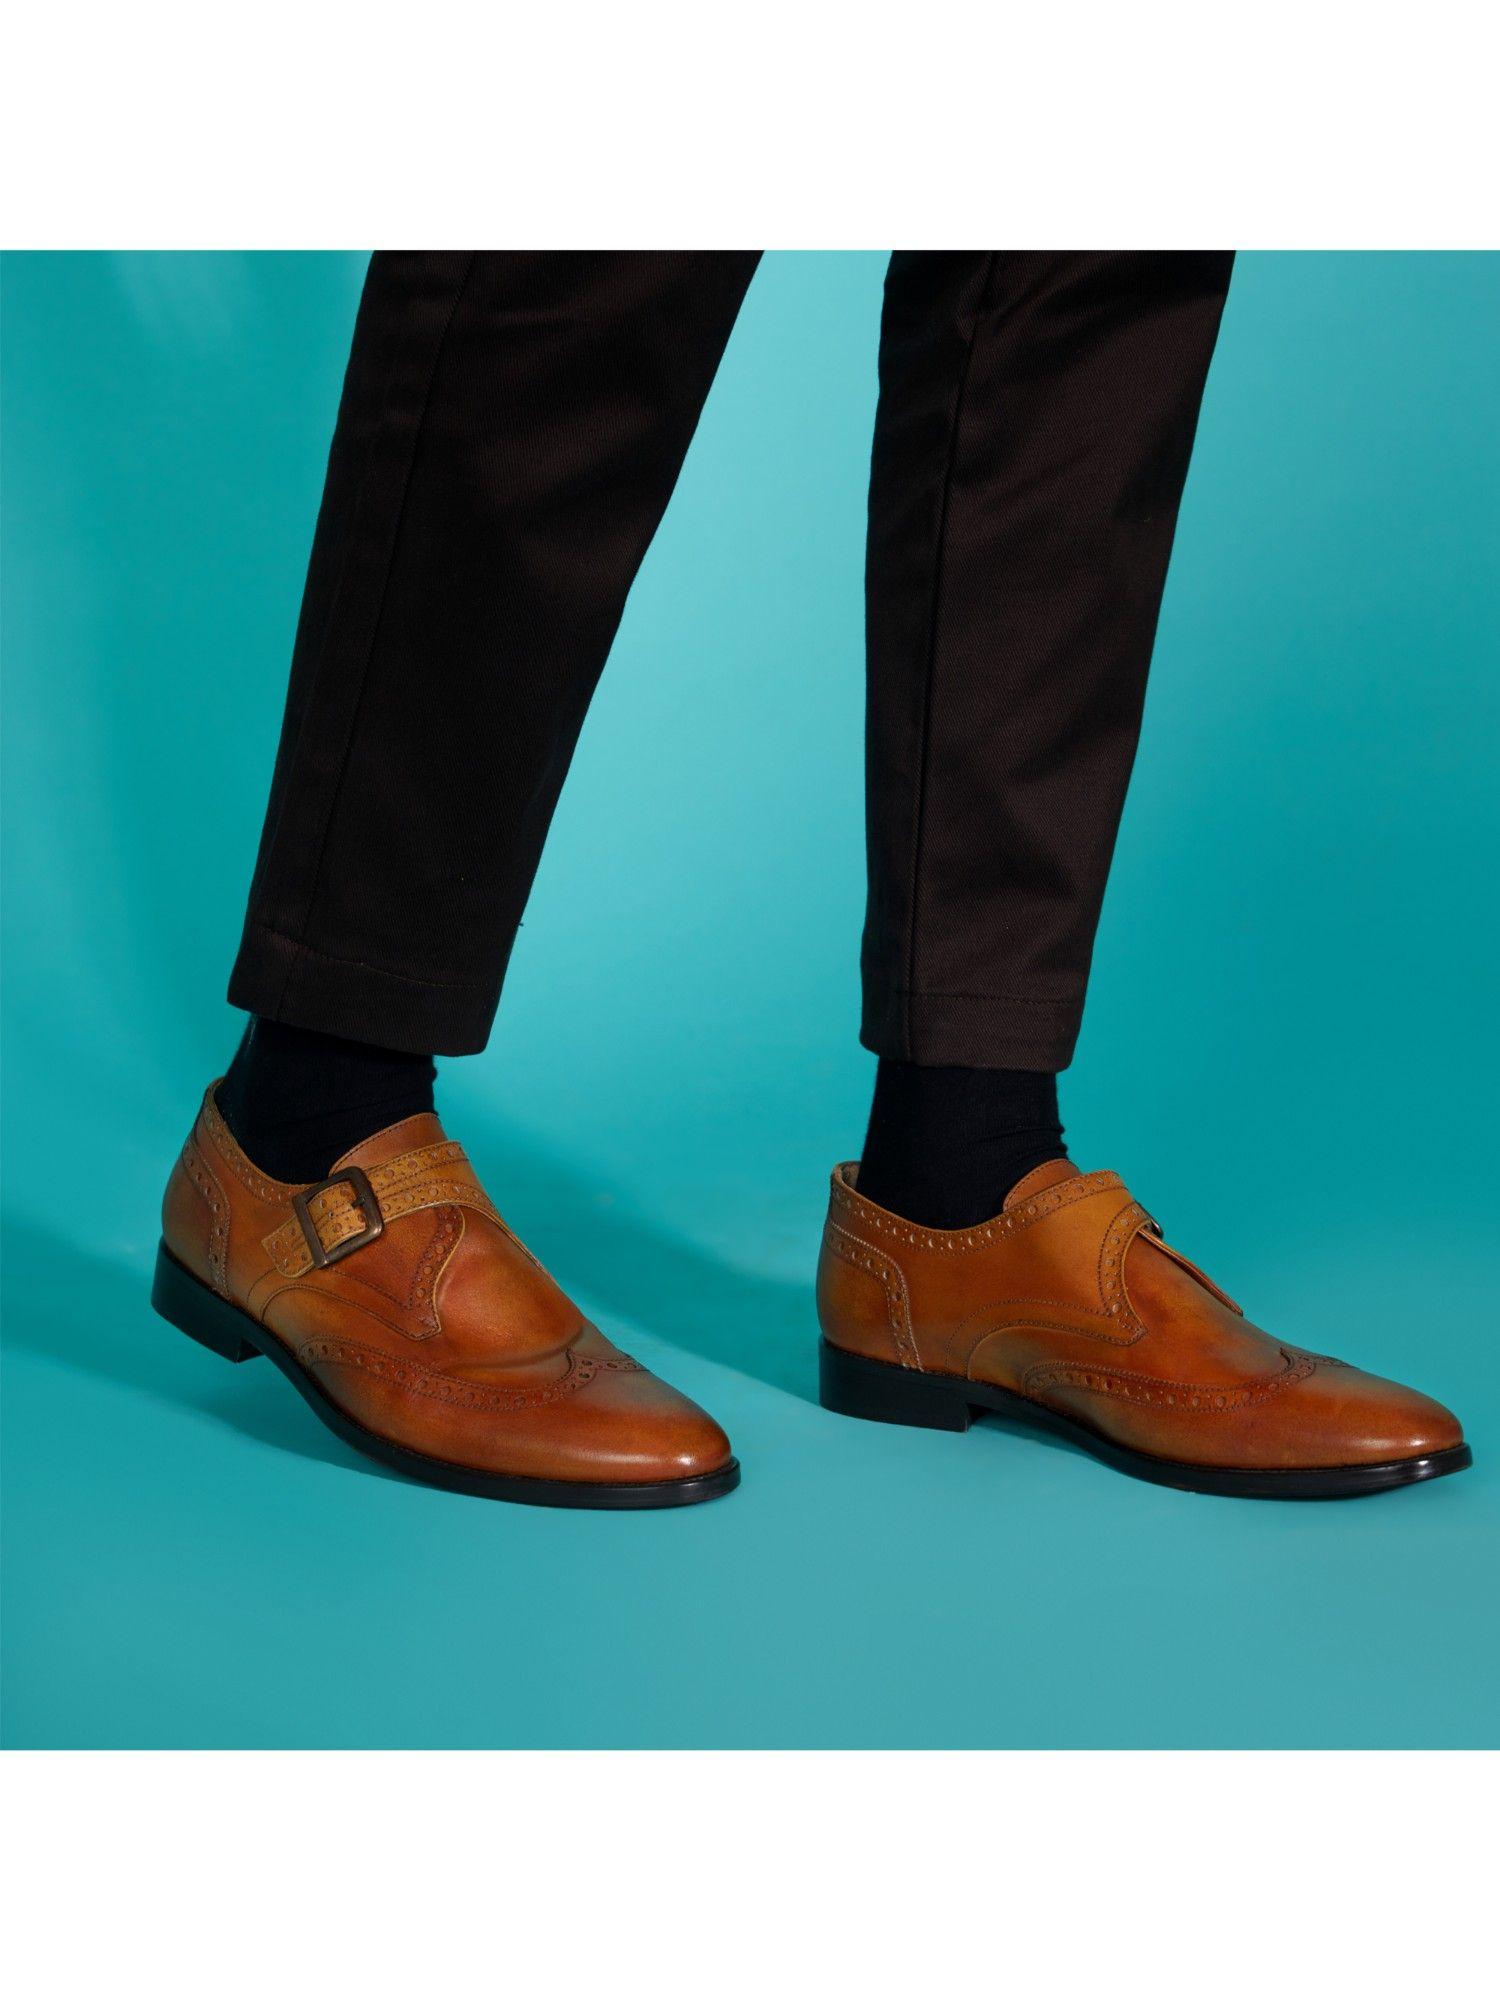 gerardo-tan-leather-single-monk-straps-brogue-shoes